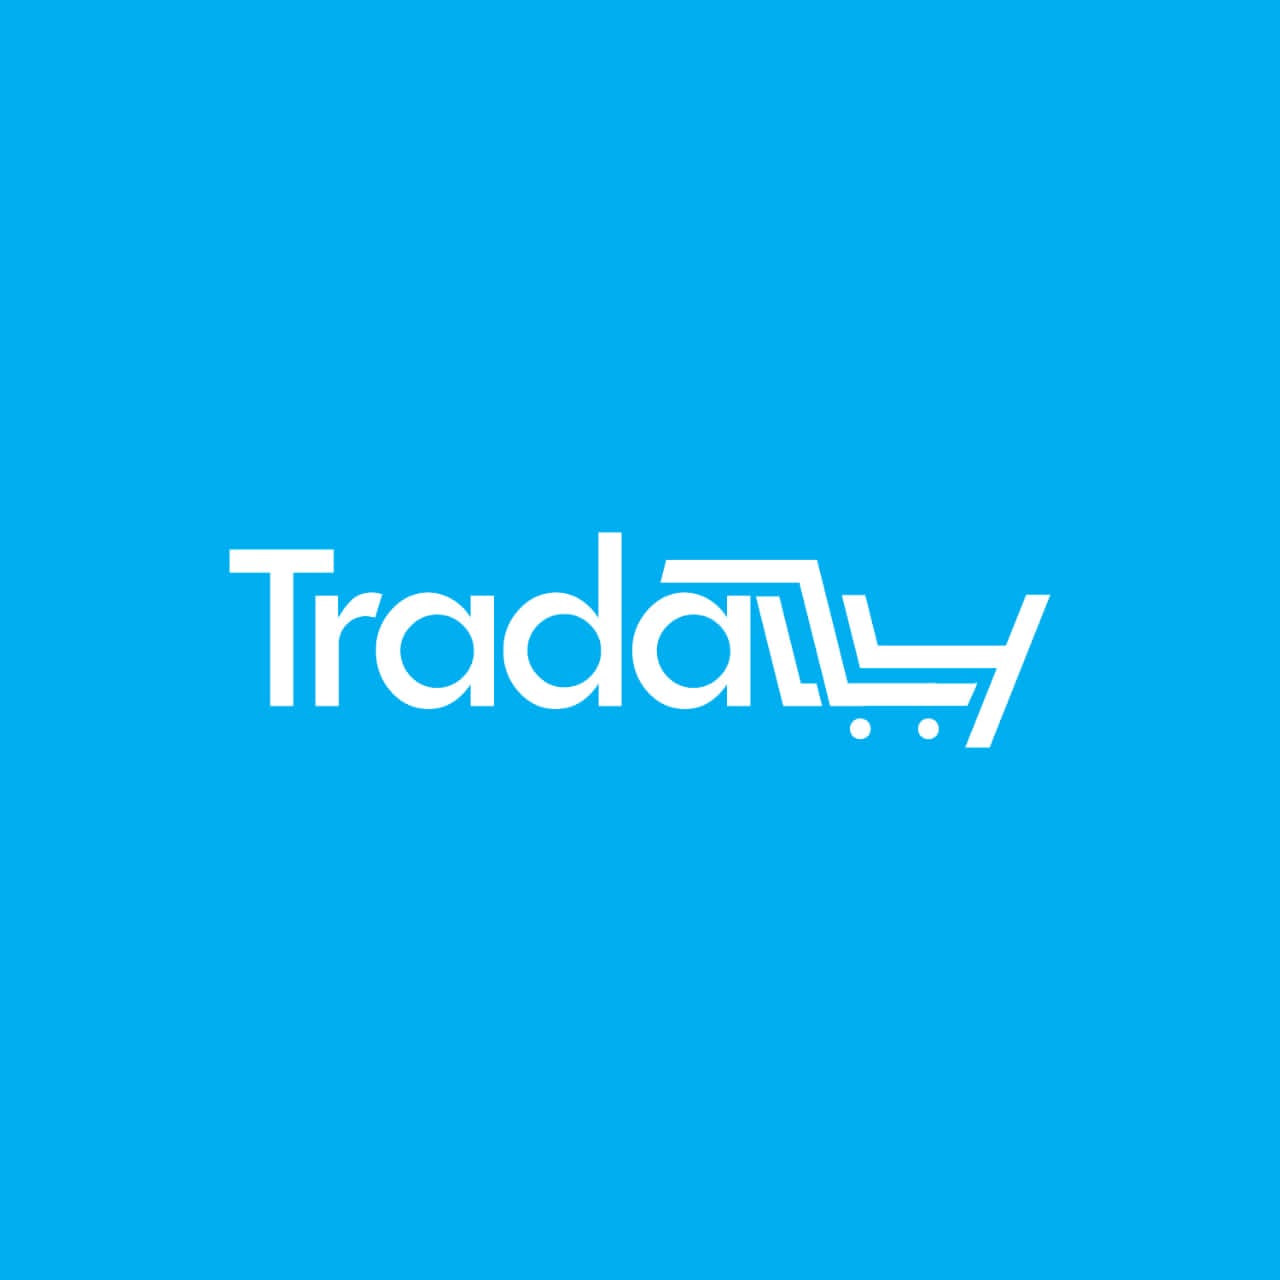 Tradally Marketplace Logo